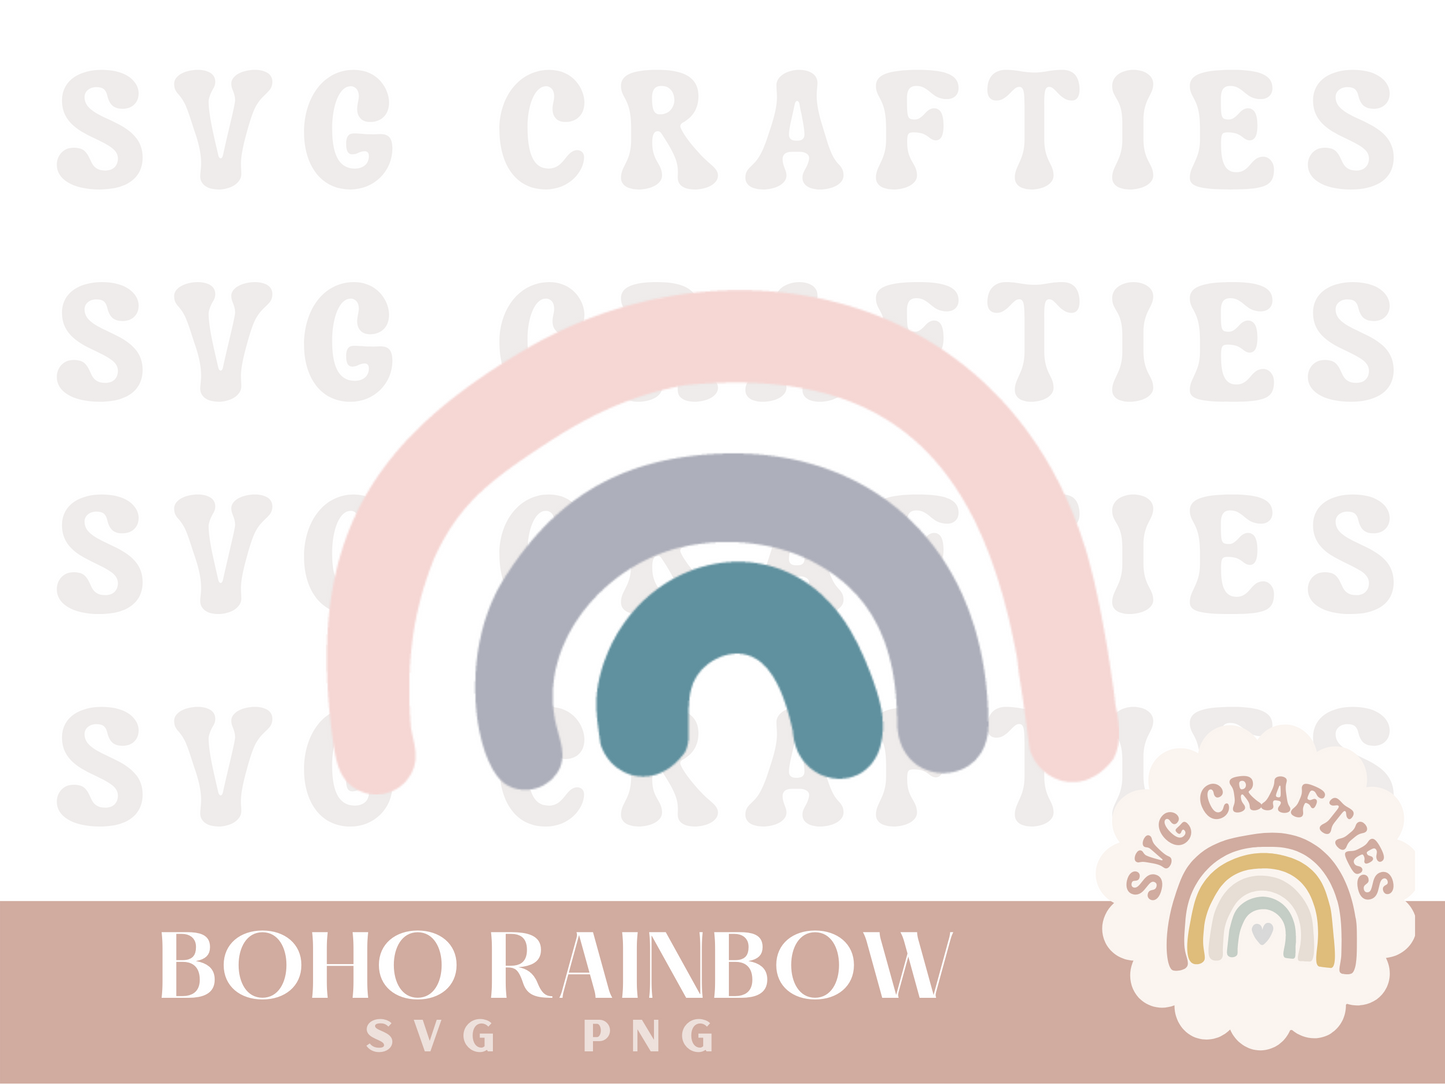 Boho Rainbow Free SVG Download